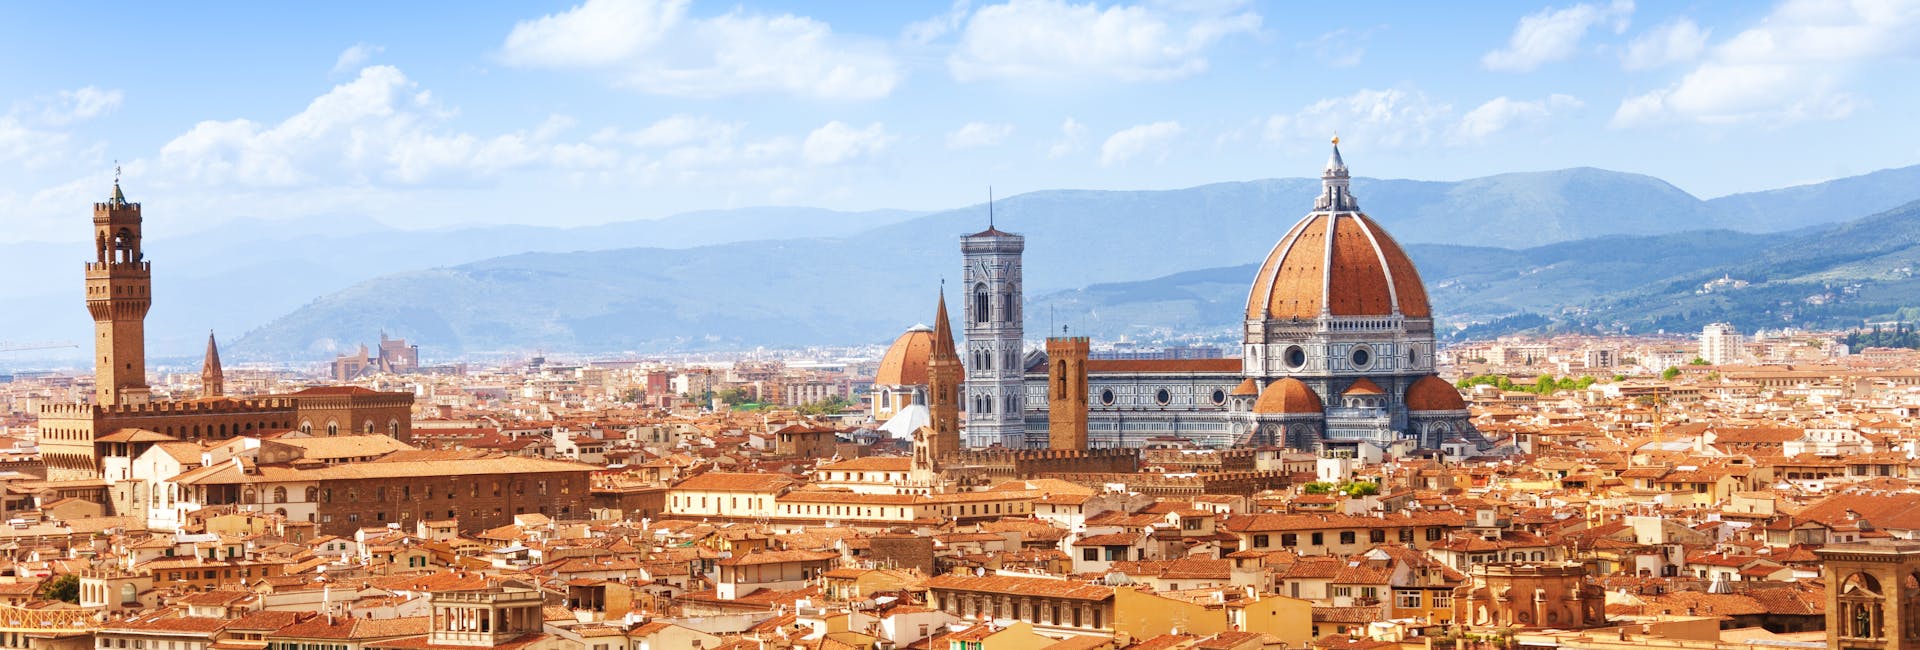 Firenze skyline